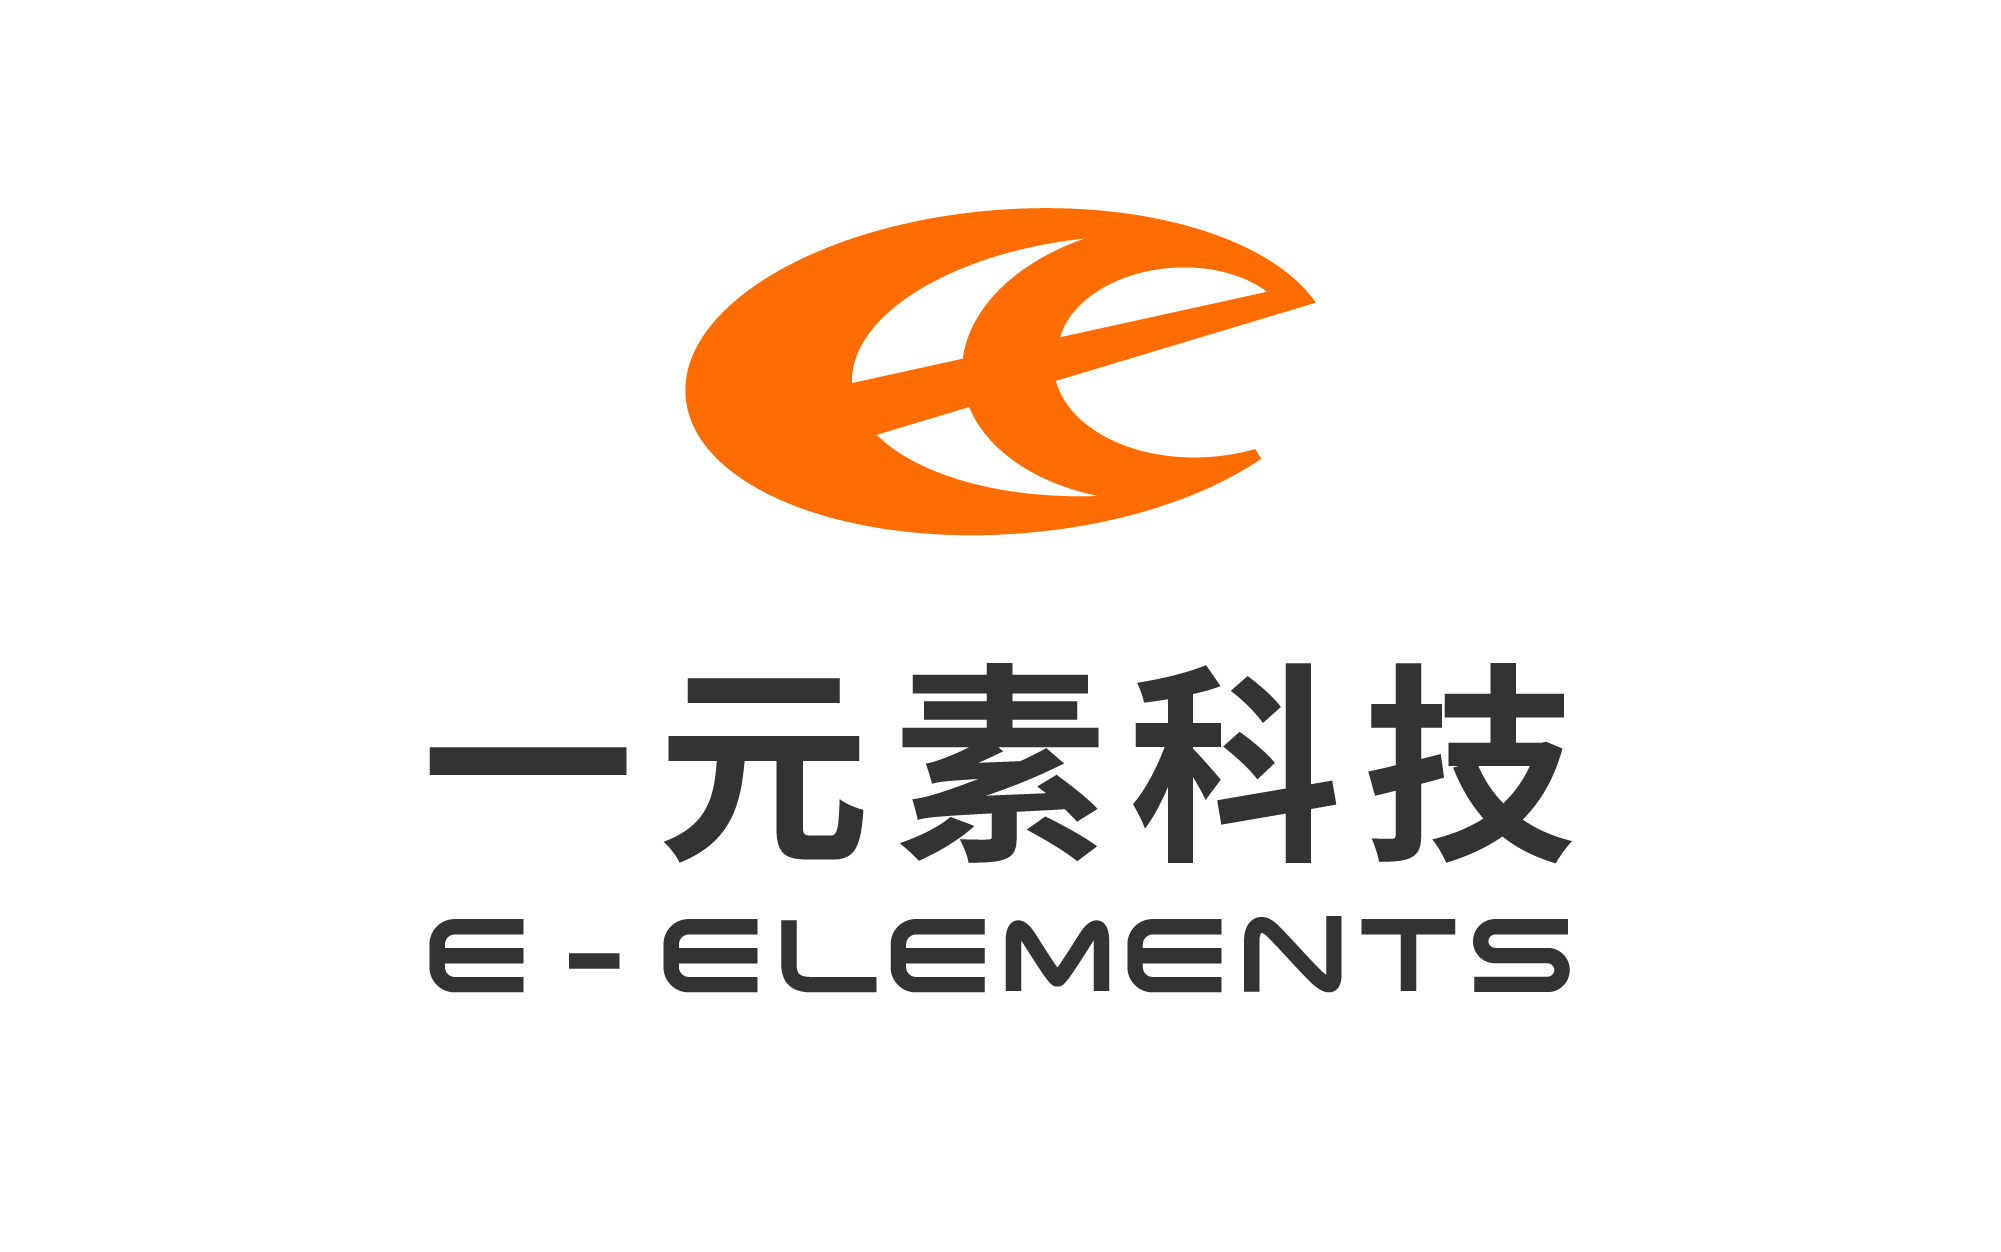 E-elements